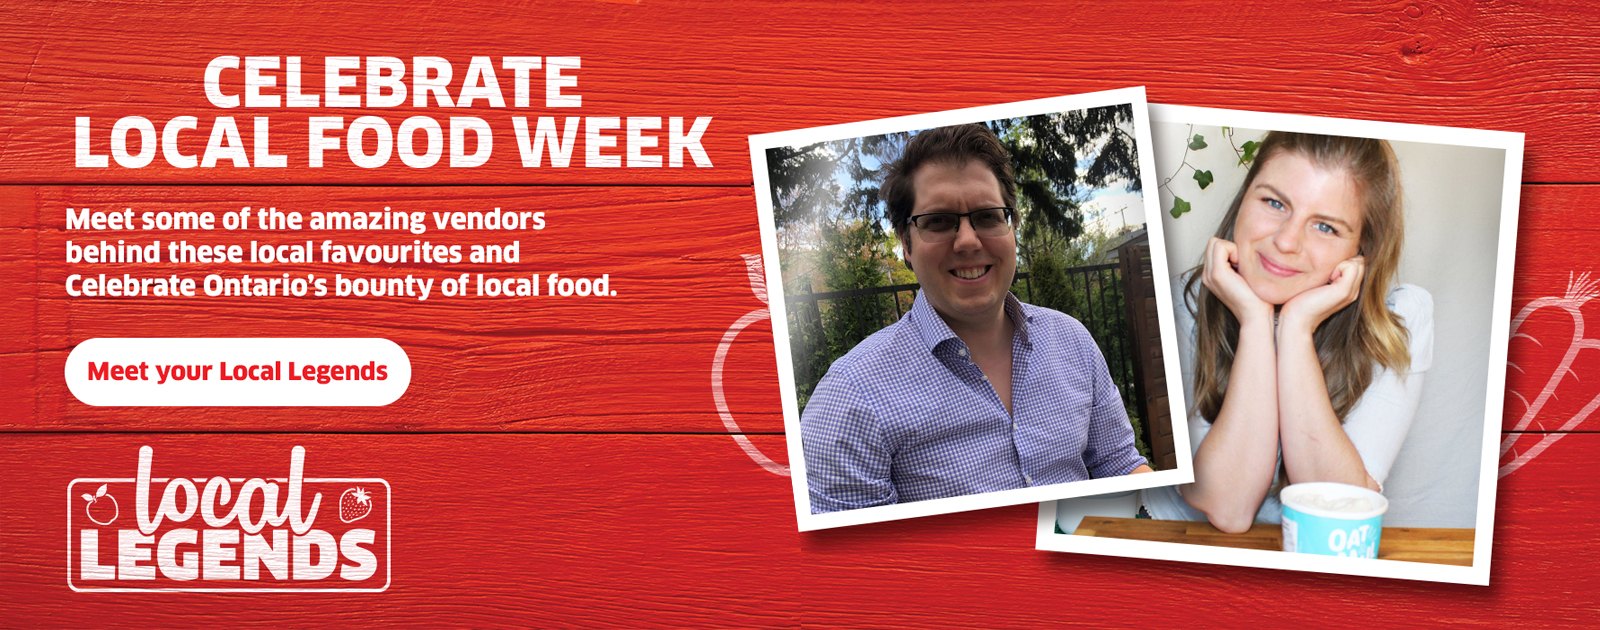 Celebrate Local Food Week